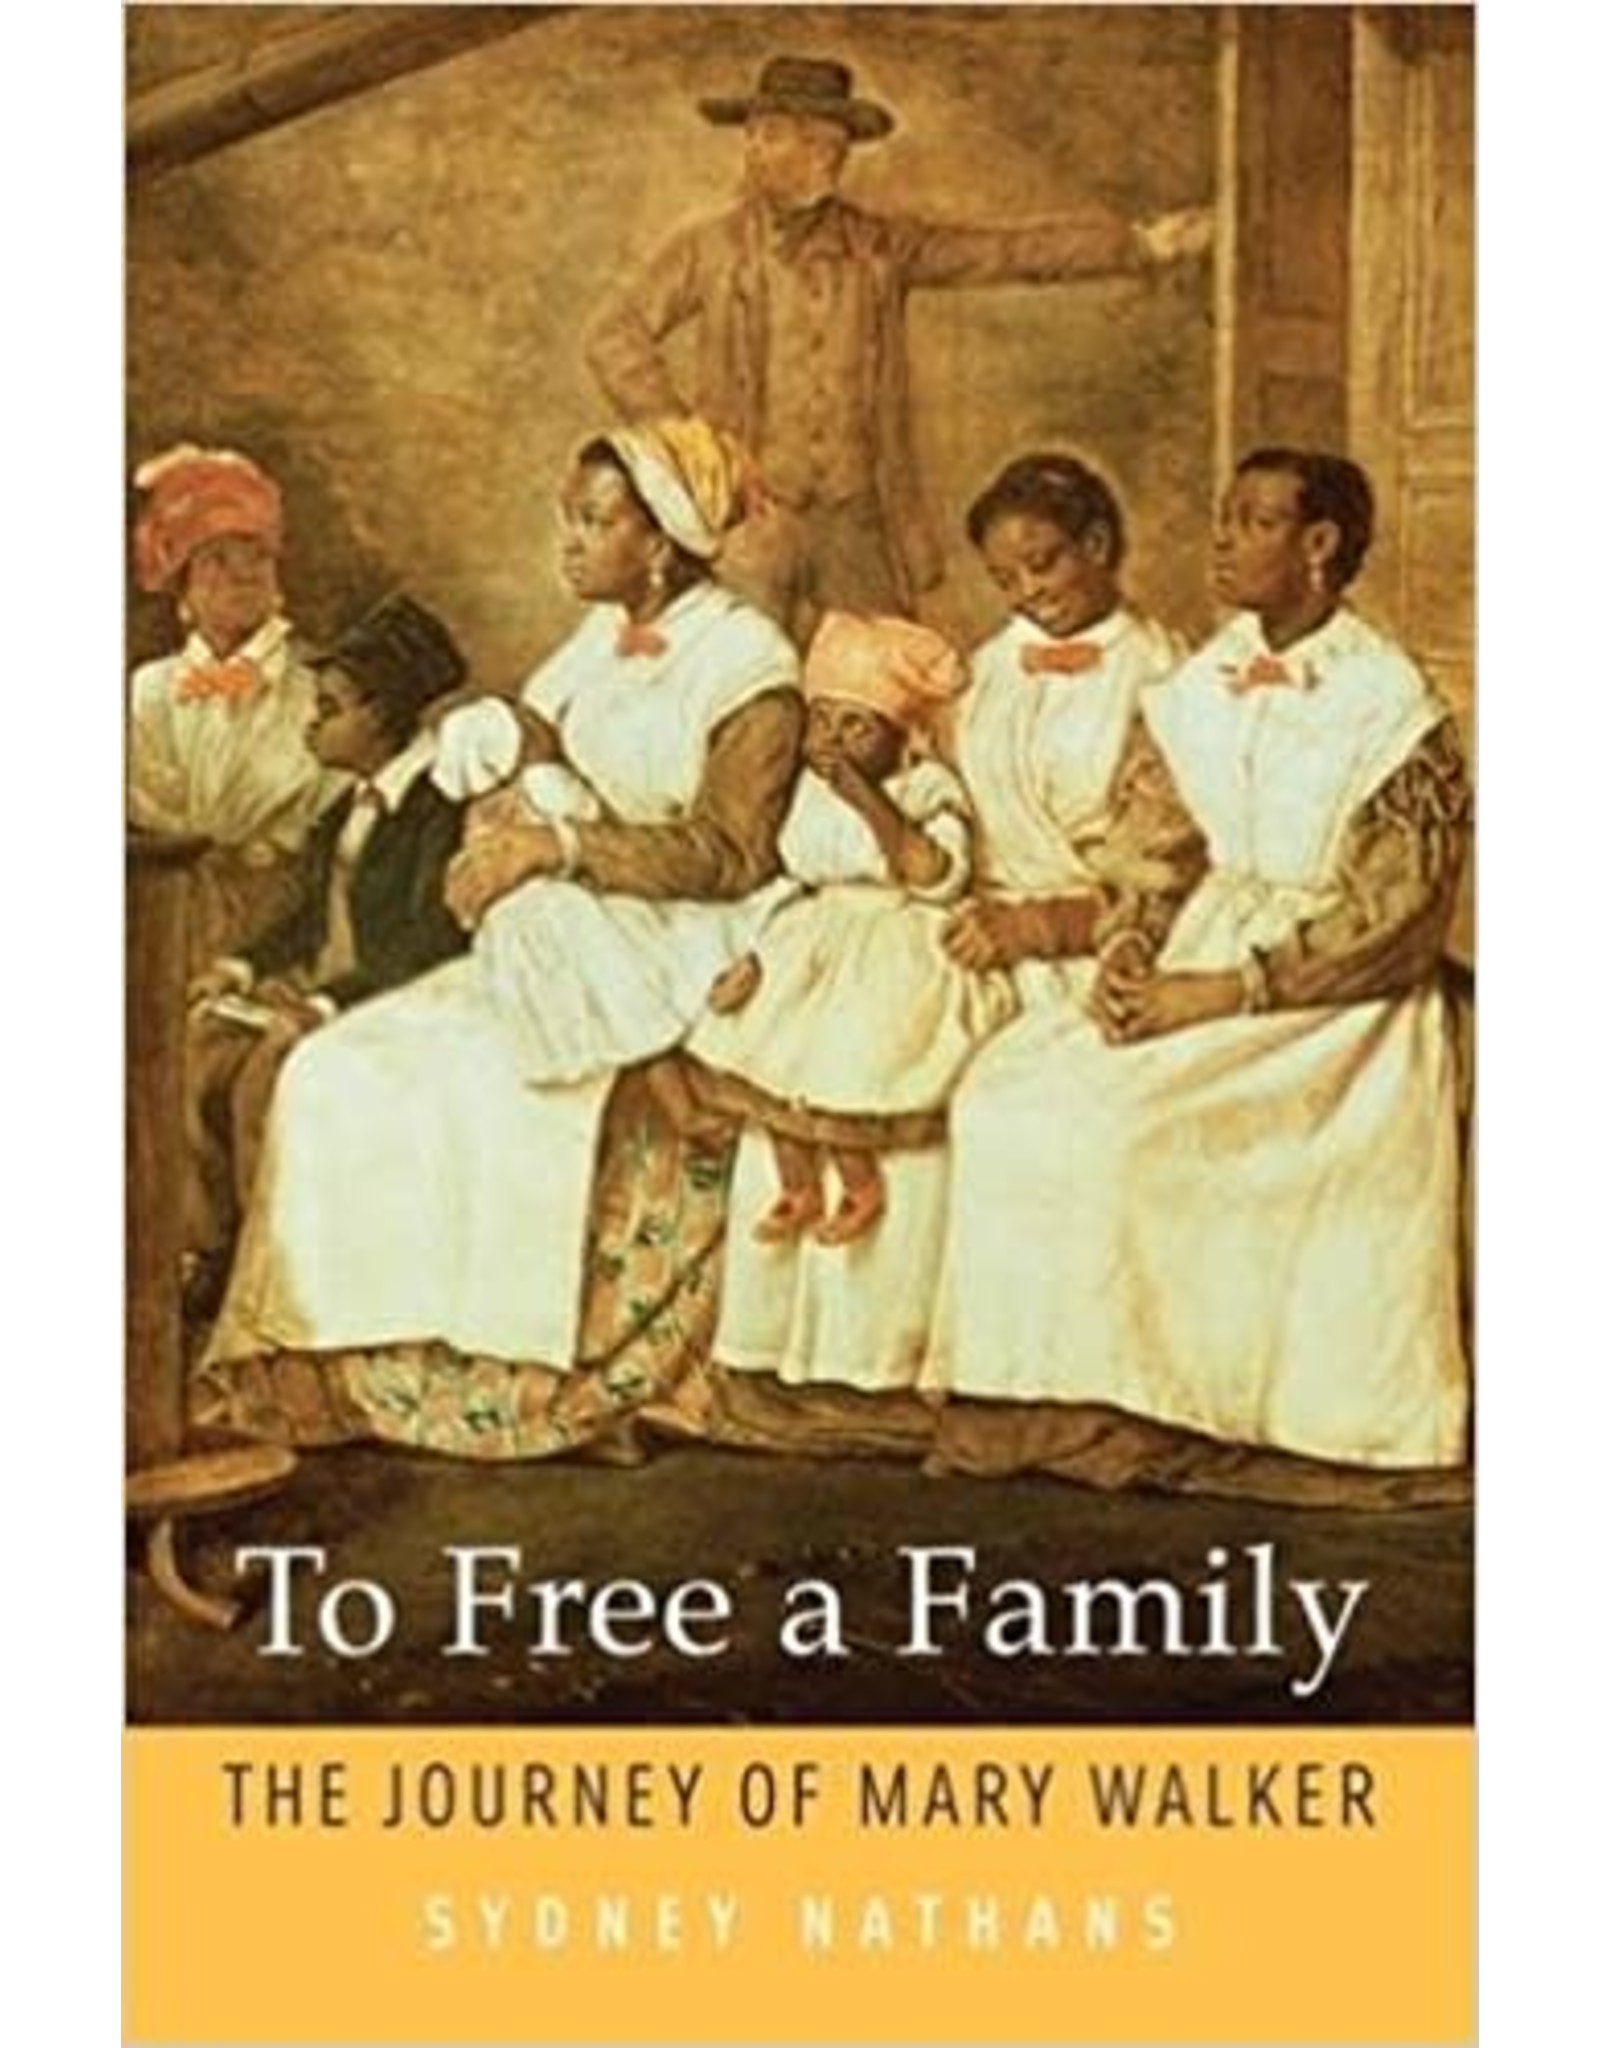 Non-Fiction: Slave Narratives To Free a Family